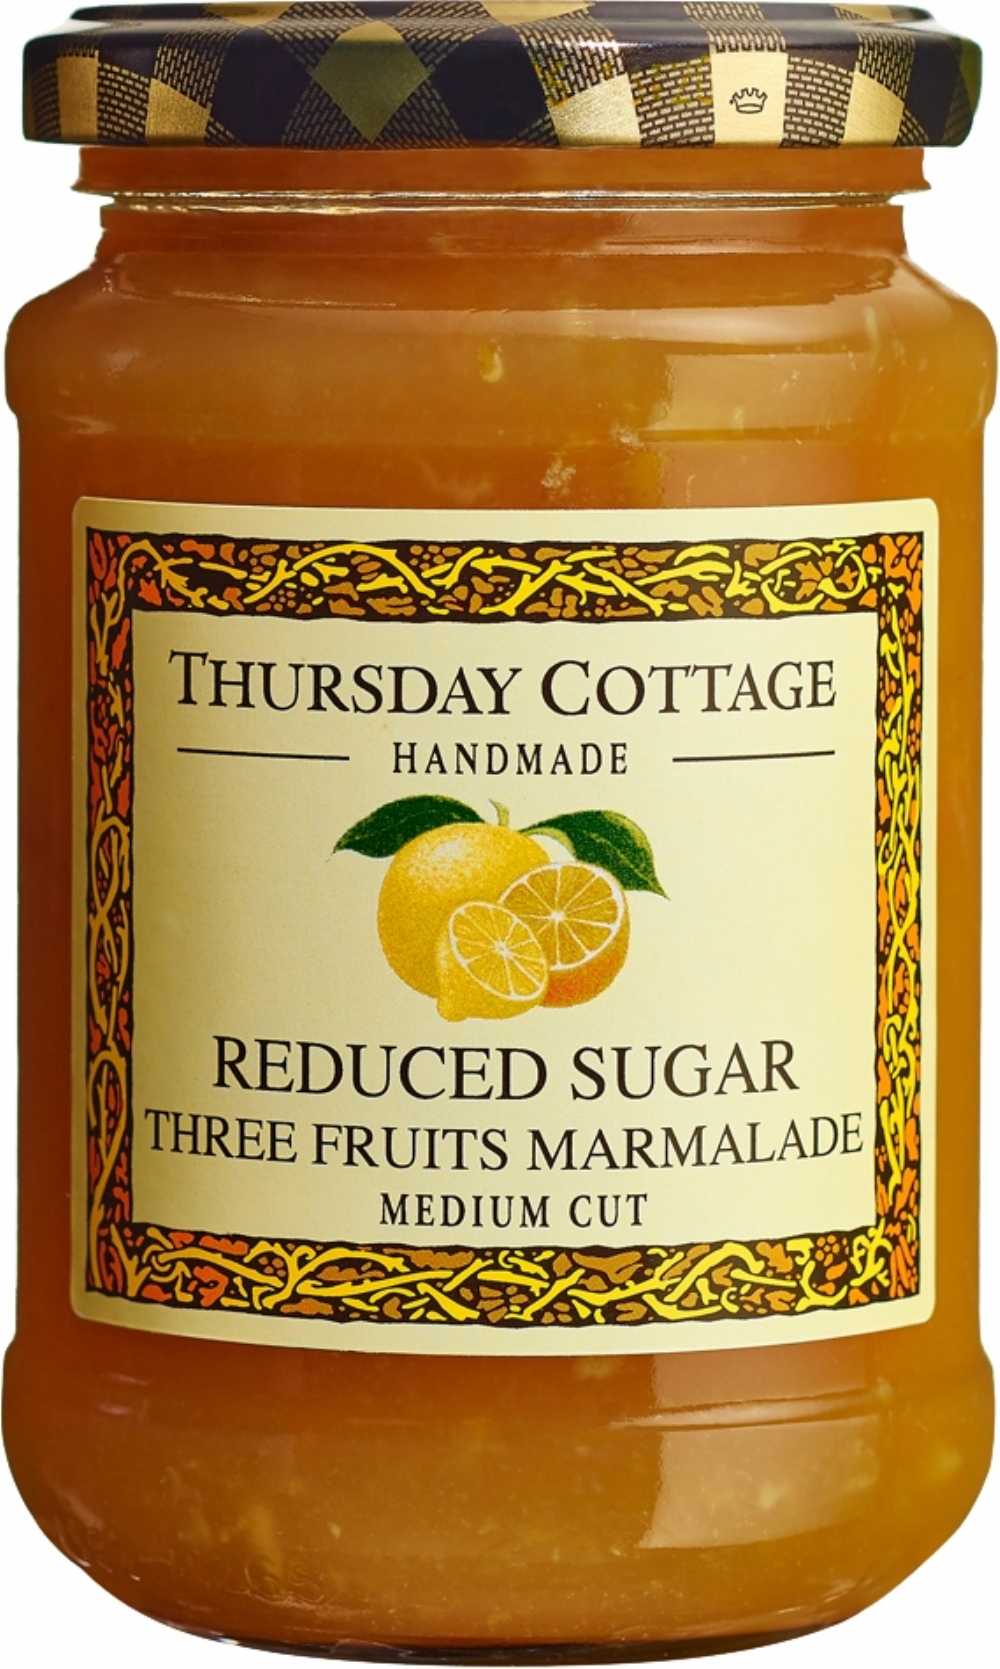 THURSDAY COTTAGE Three Fruits Marmalade - Reduced Sugar